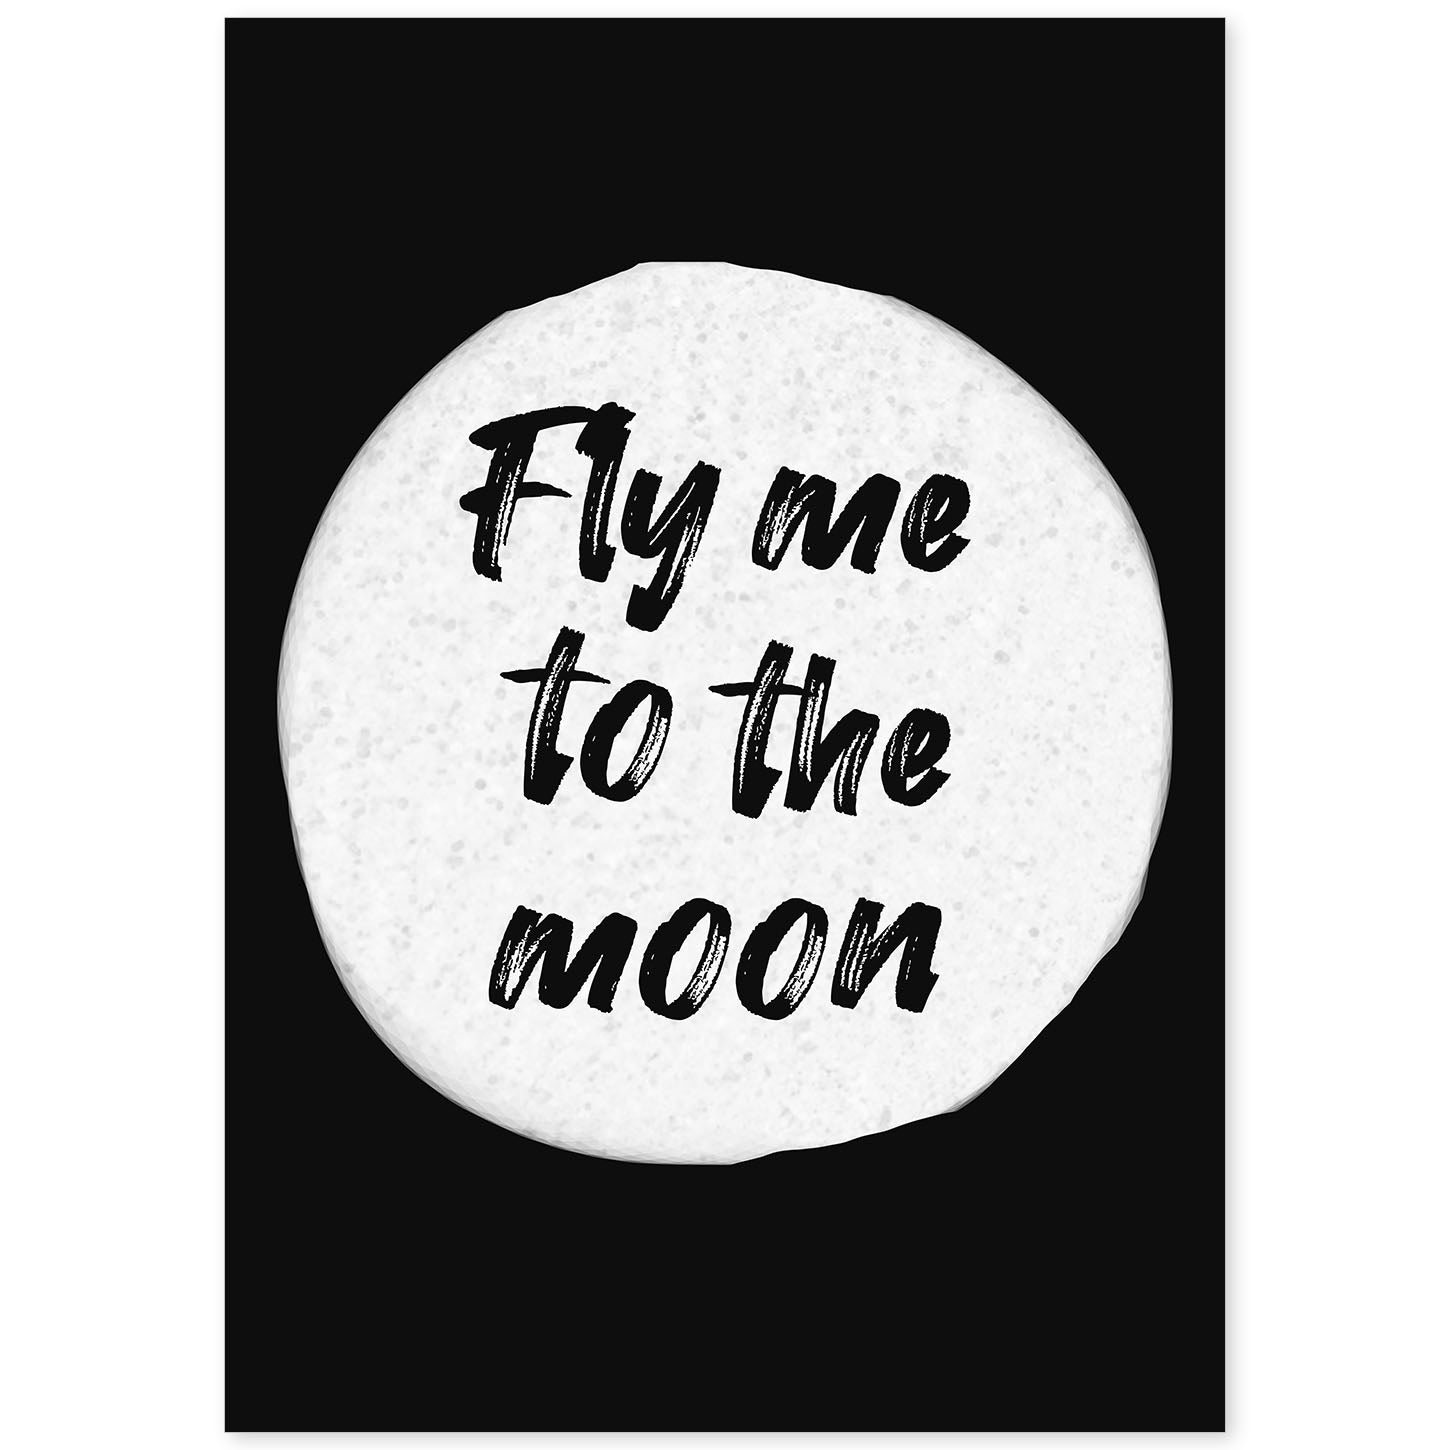 Lamina artistica decorativa con ilustración de fly me to the moon estilo Mensaje inspiracional-Artwork-Nacnic-A4-Sin marco-Nacnic Estudio SL